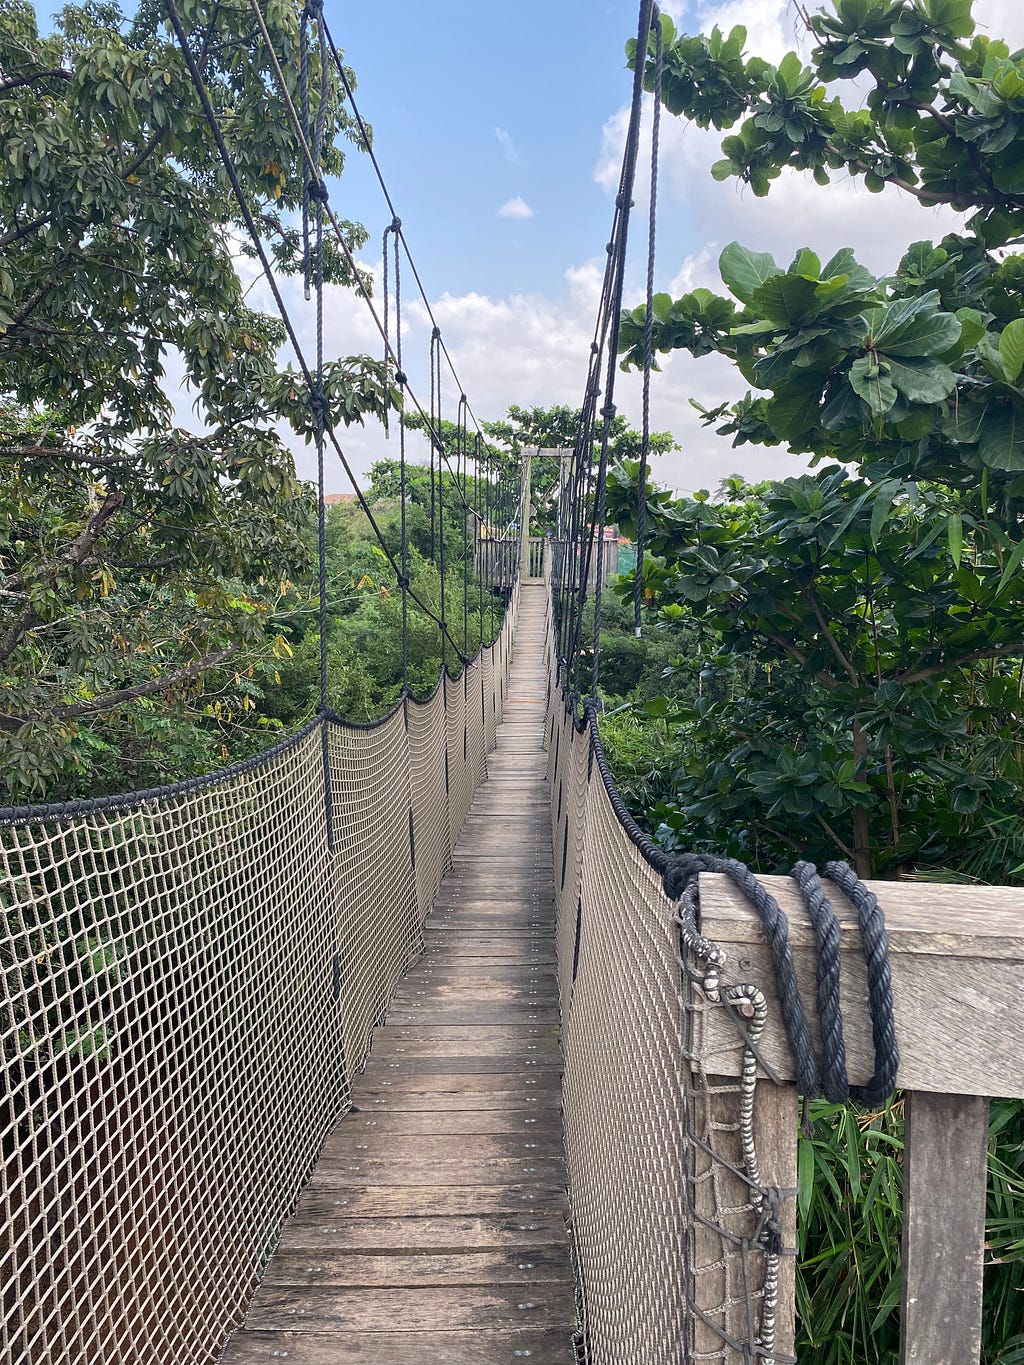 Wooden, rope canopy bridge through the trees of Legon Botanical Garden.